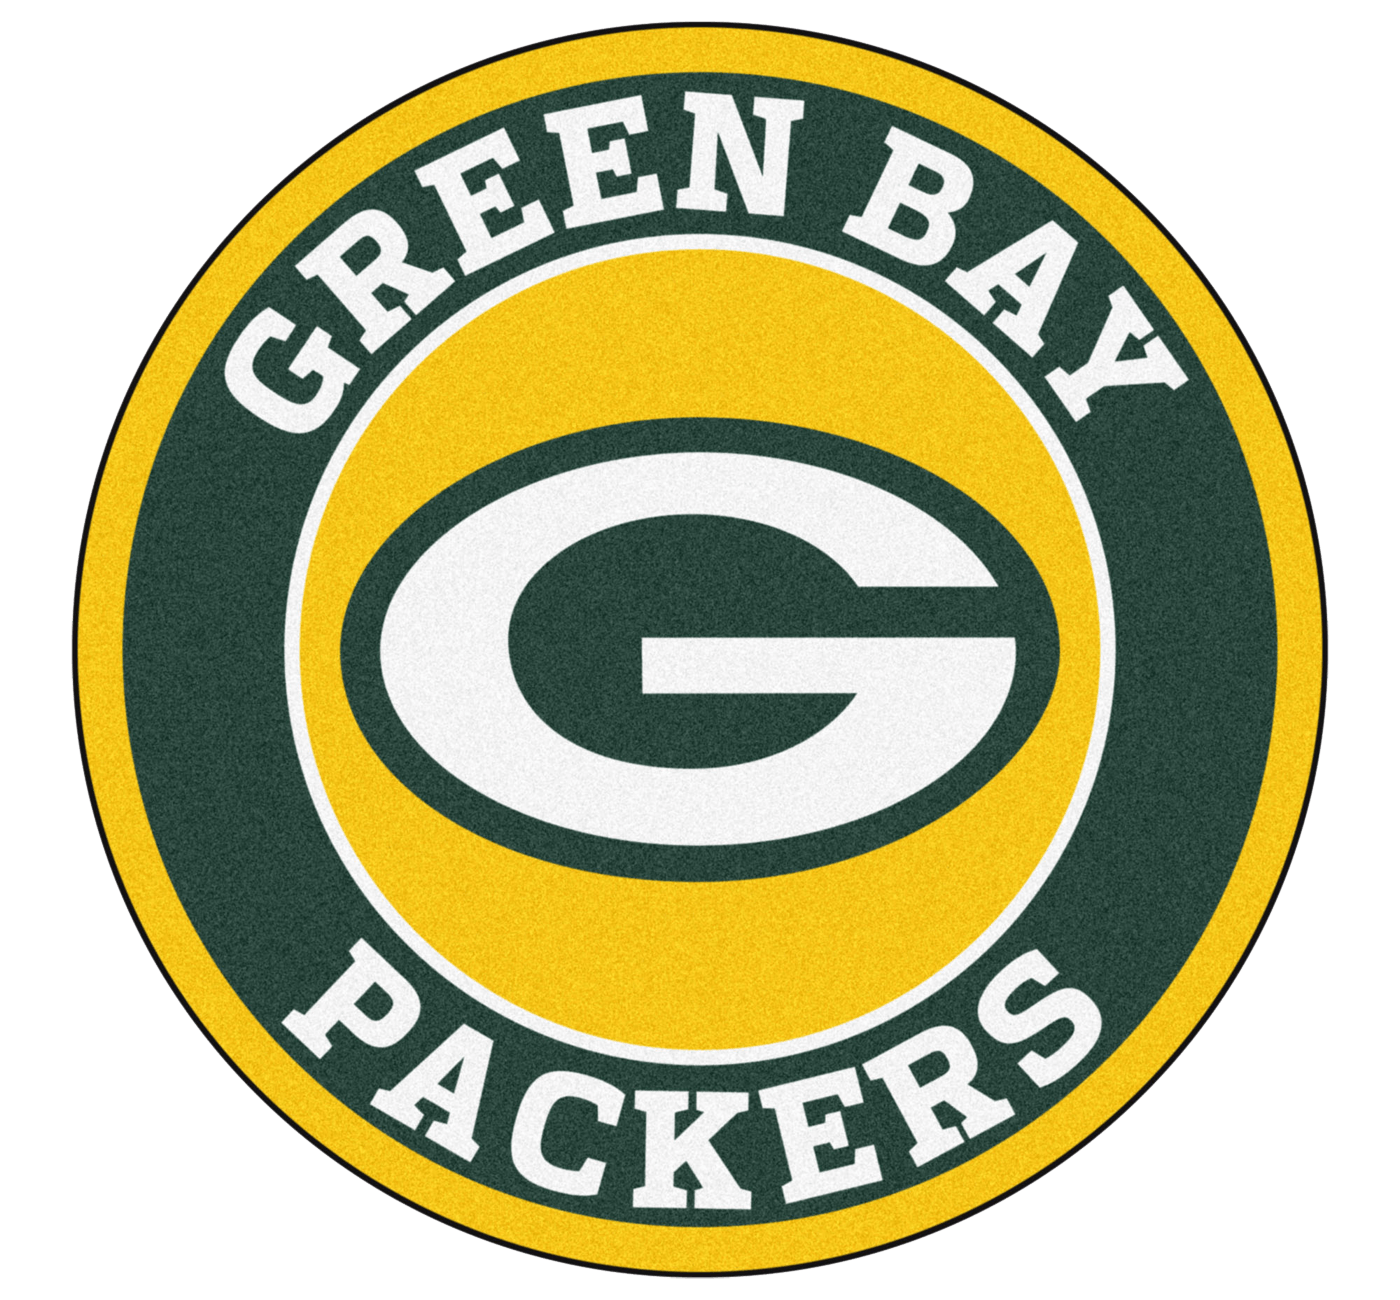 Green and Yellow Football Logo - Green Bay Packers Logo, Green Bay Packers Symbol Meaning, History